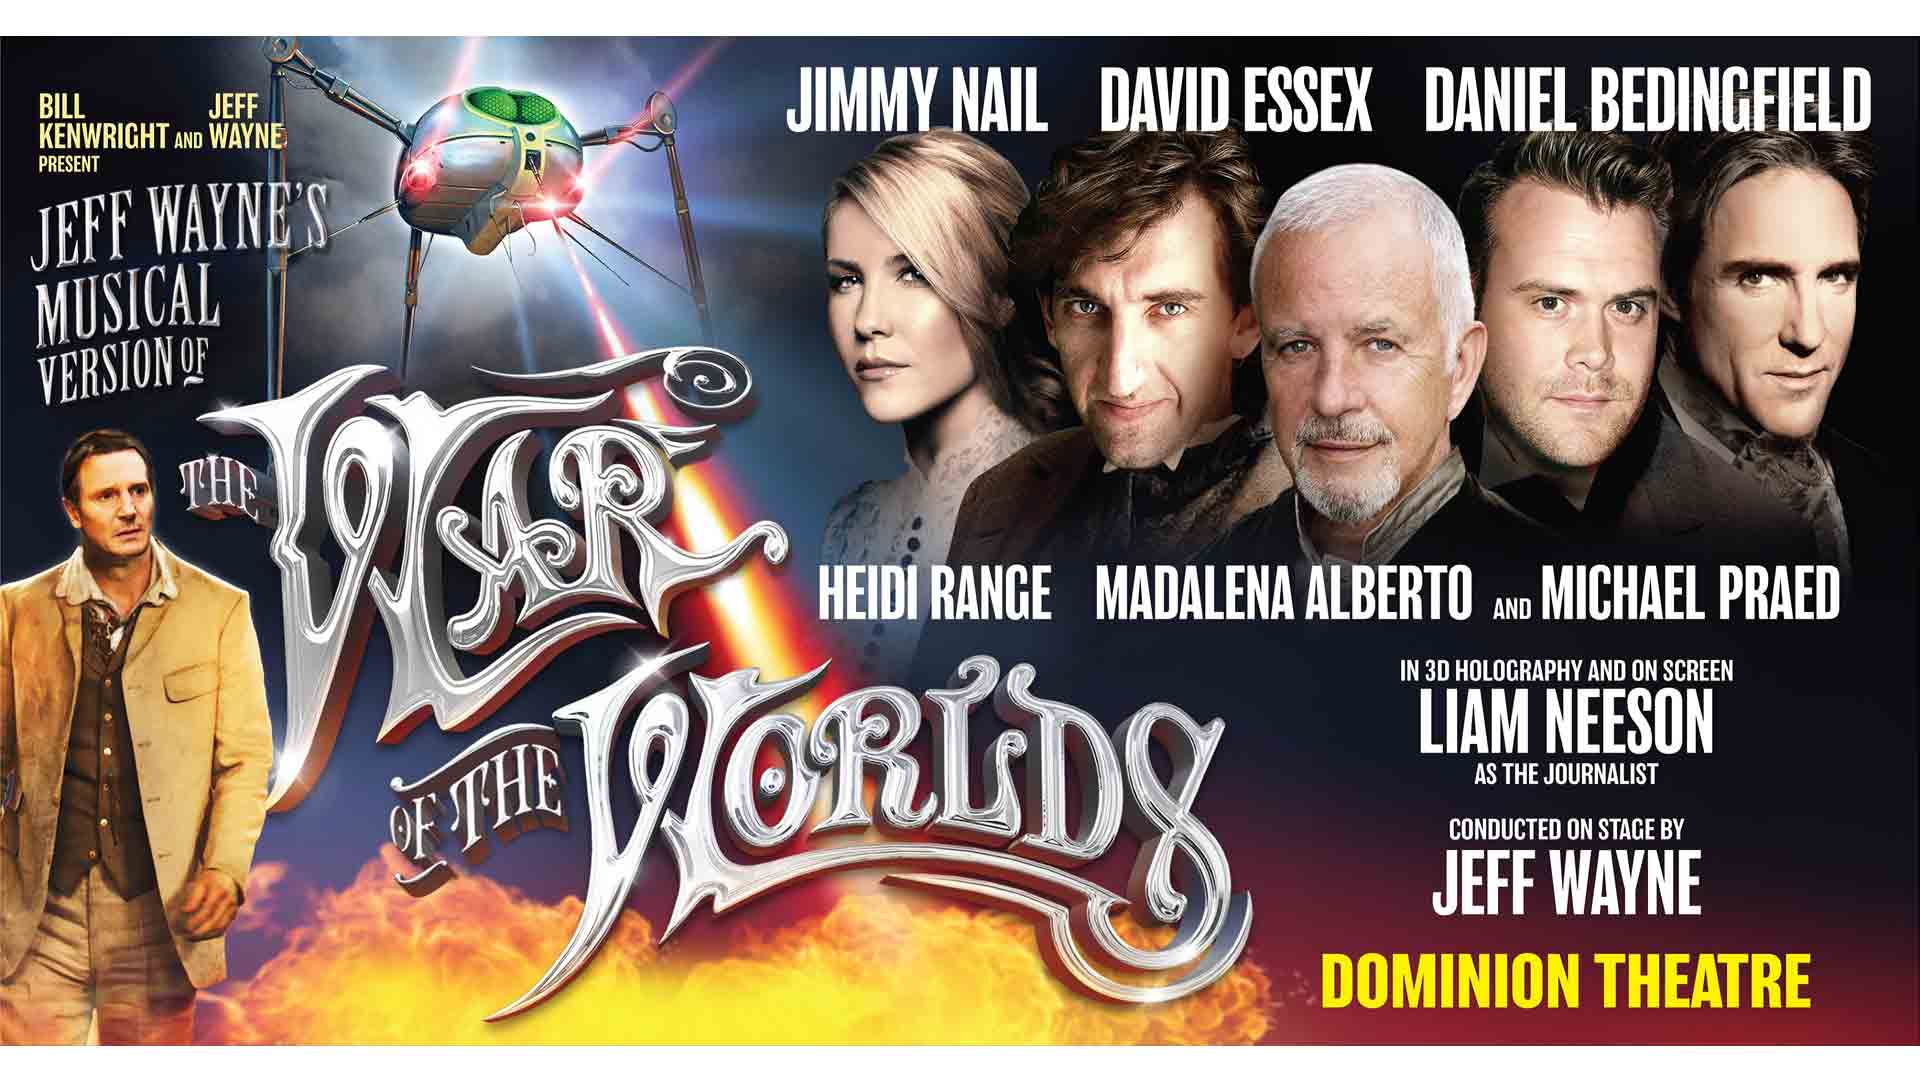 David Essex, Daniel Bedingfield, Jimmy Nail, Heidi Range, Madalena Alberto and Michael Praed - The War of the Worlds